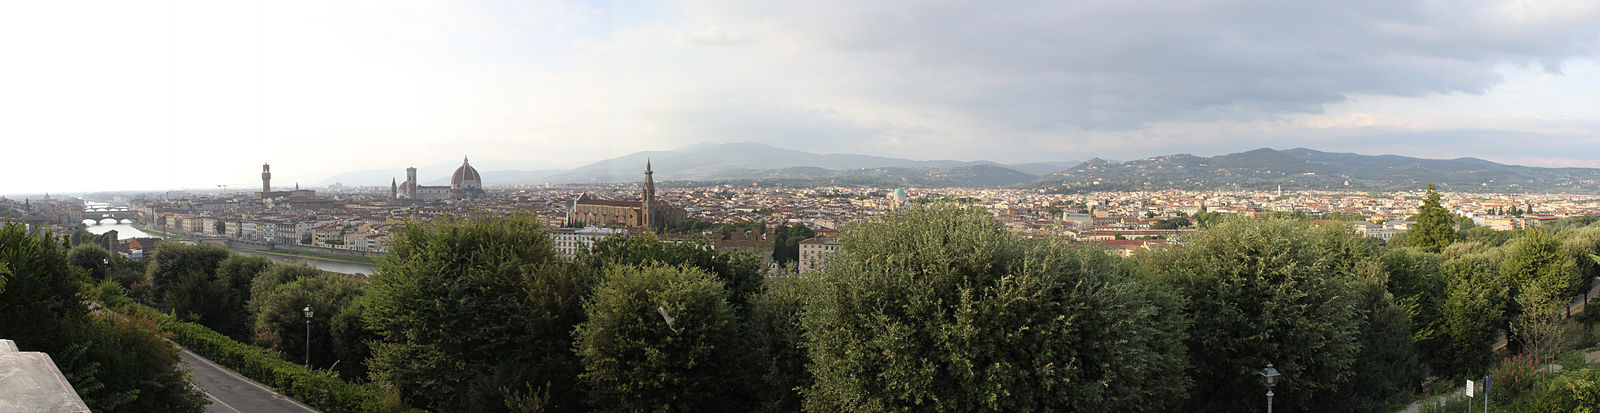 Панорама Флоренции, 2011 год. Вид на город.